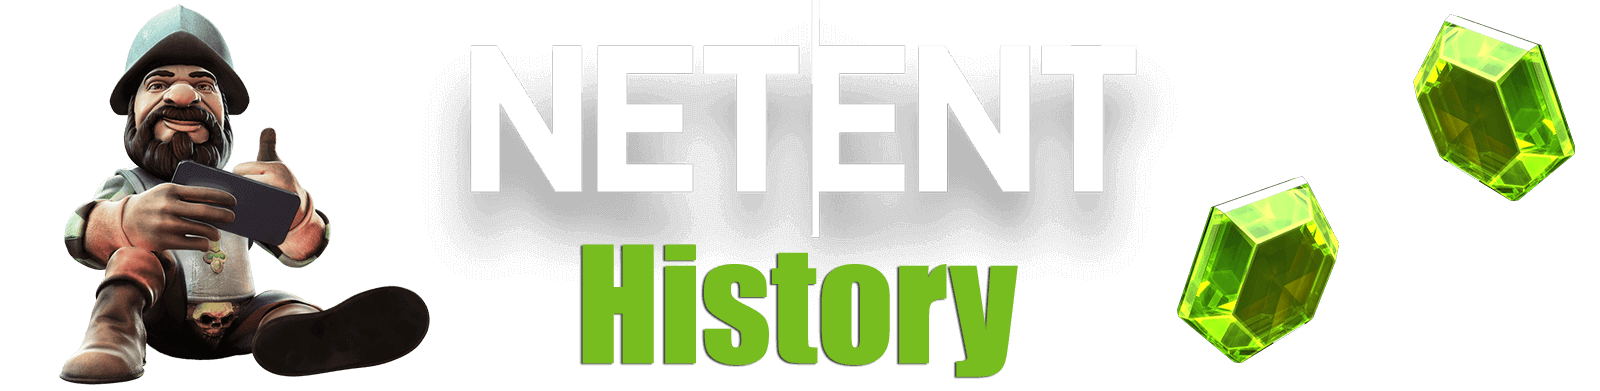 TOFCasino.com   NetEnt History